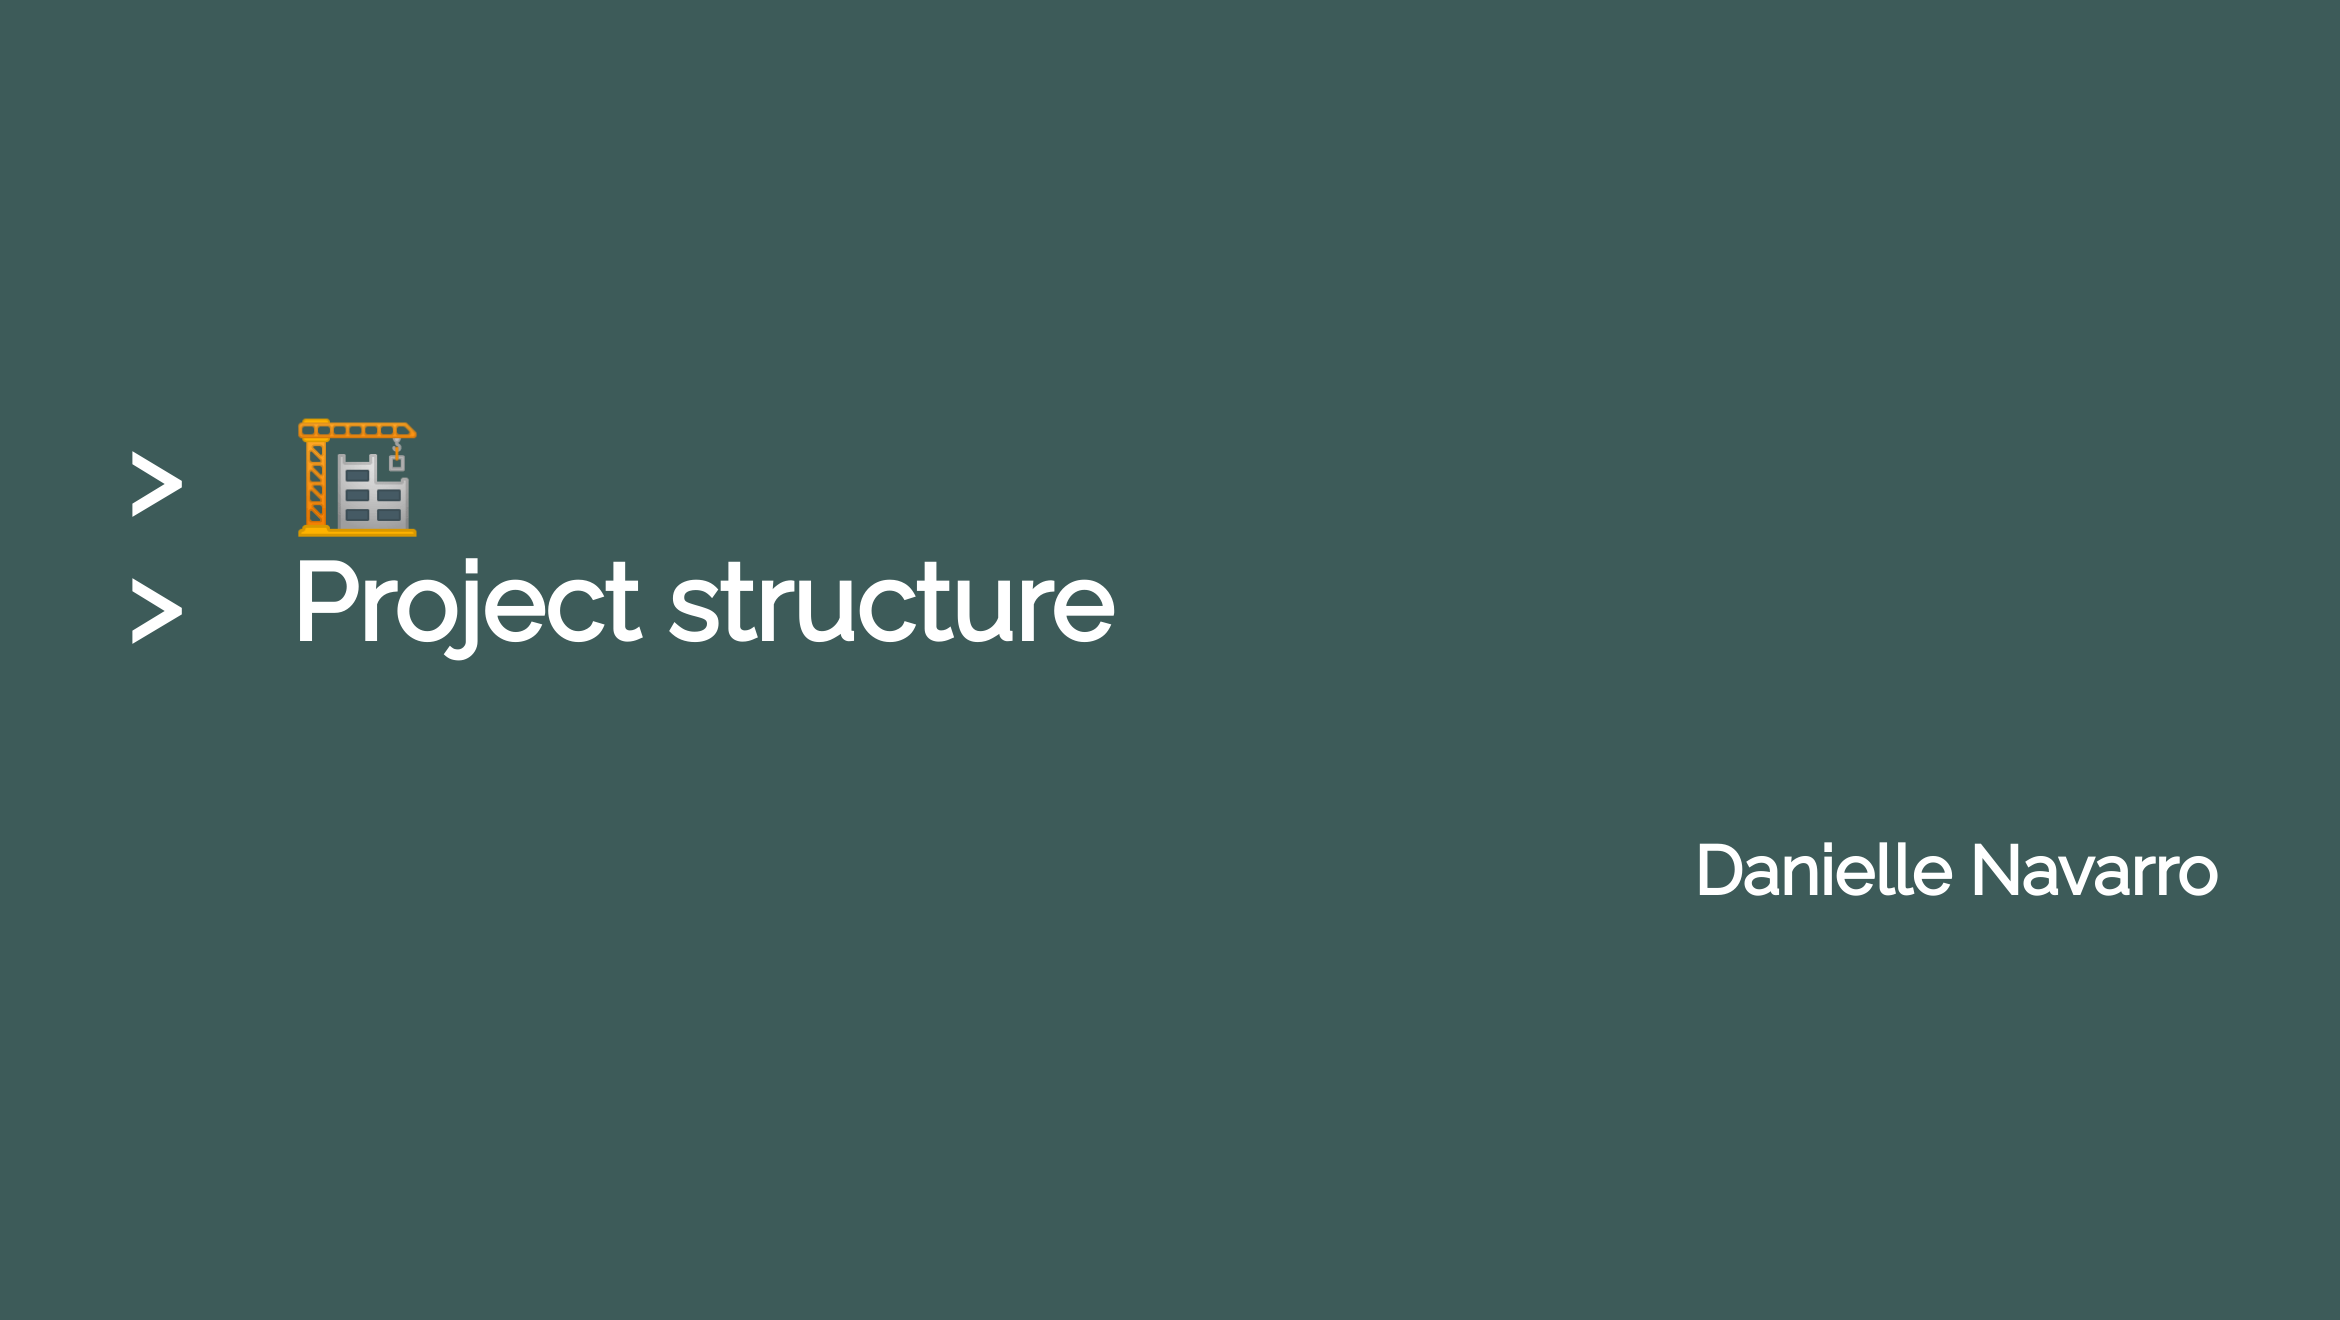 Project structure slides